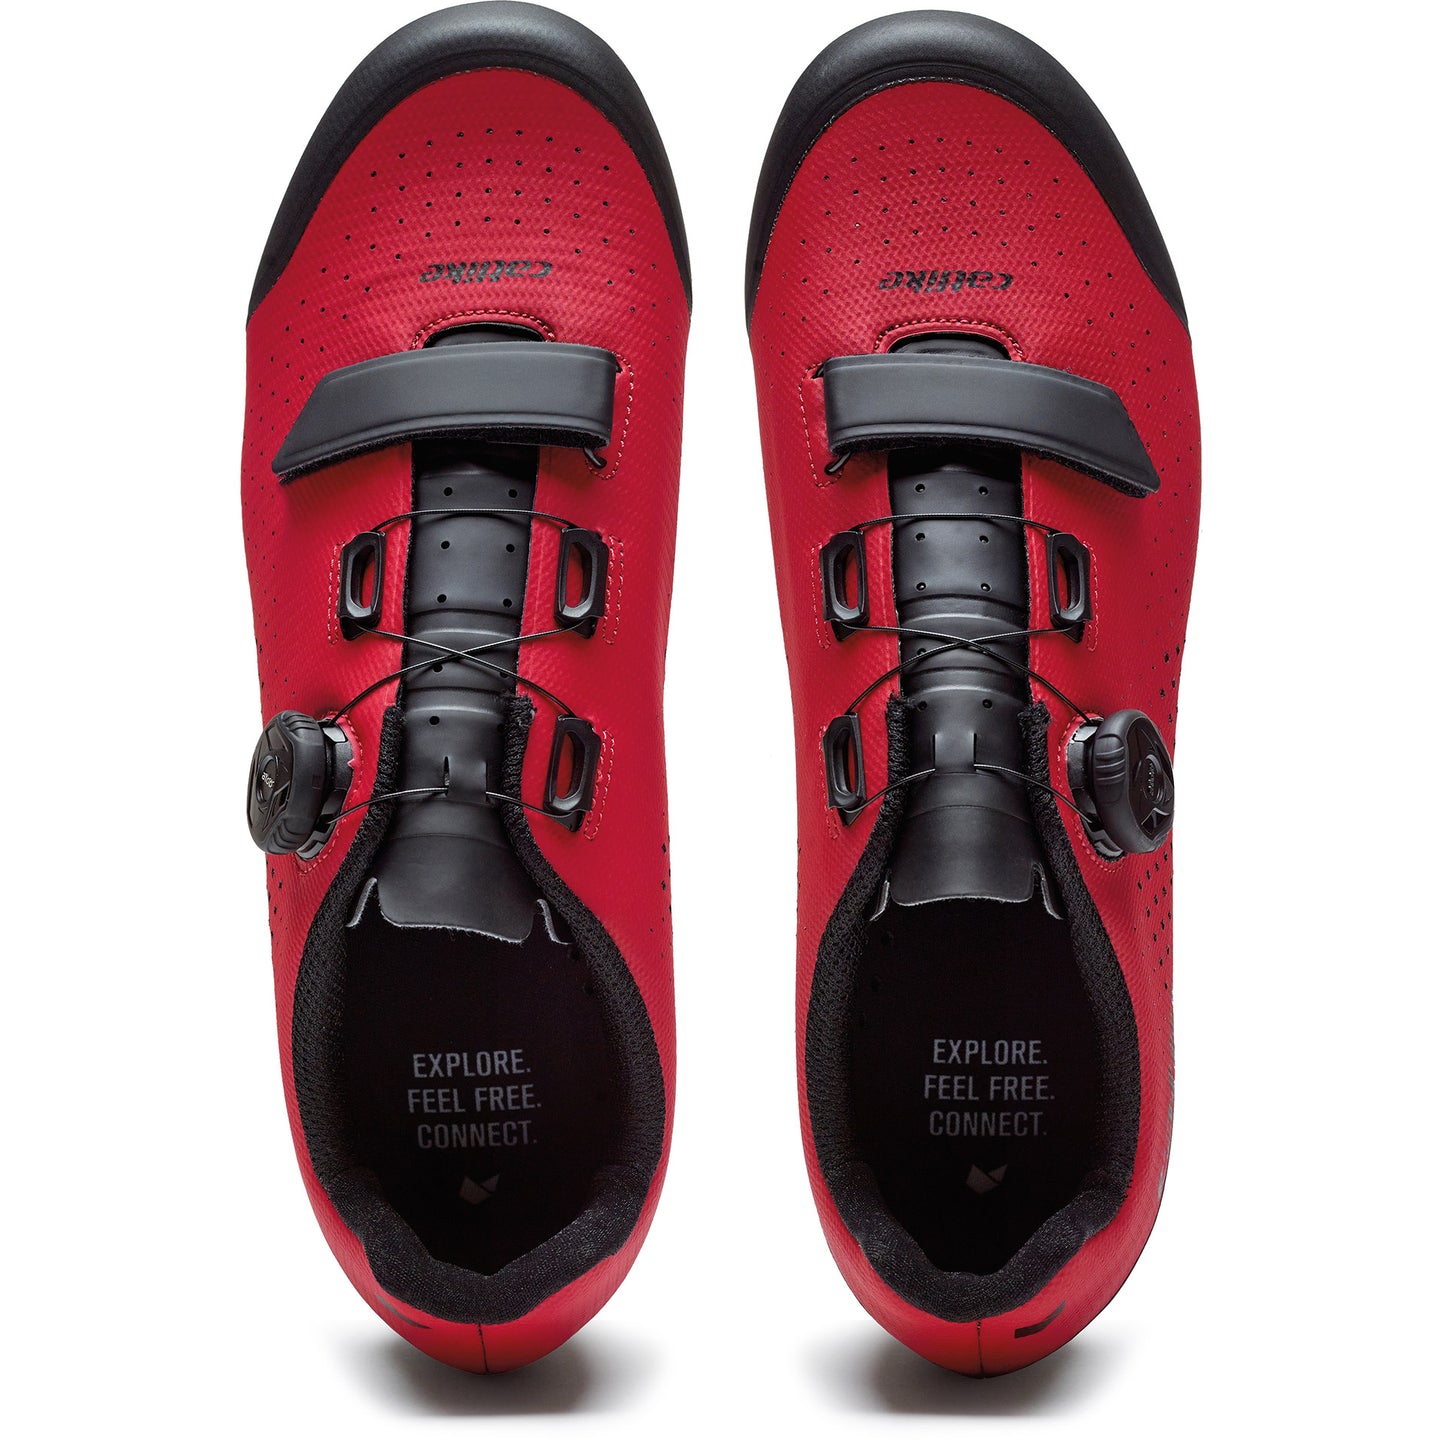 Zapatos buzaglo kompact'o x1 mtb nylon 38 rojo